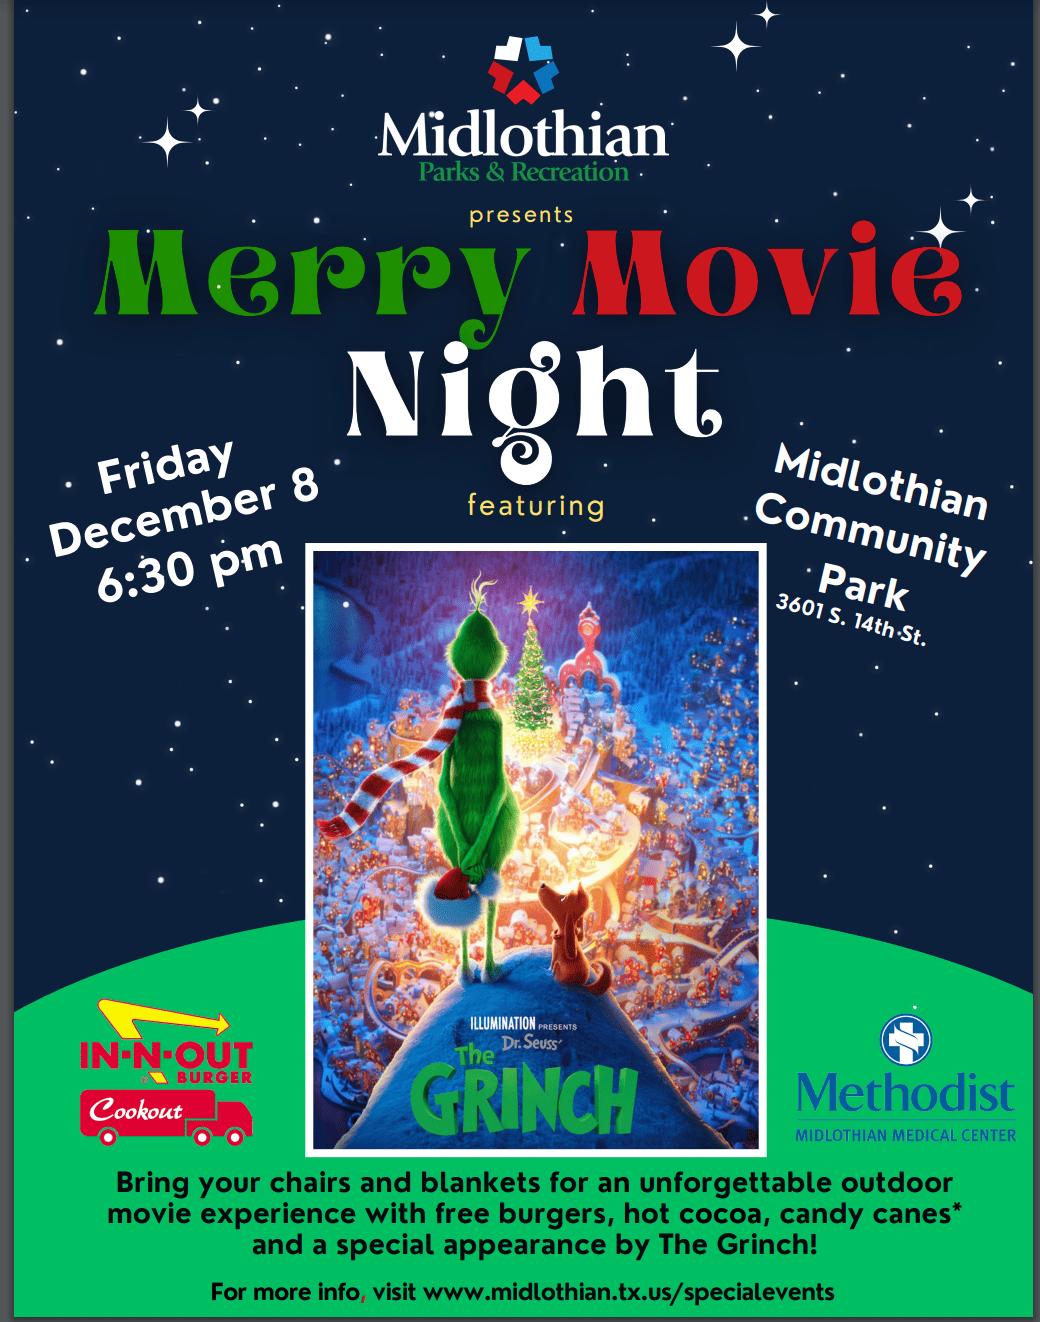 Midlothian Merry Movie Night poster